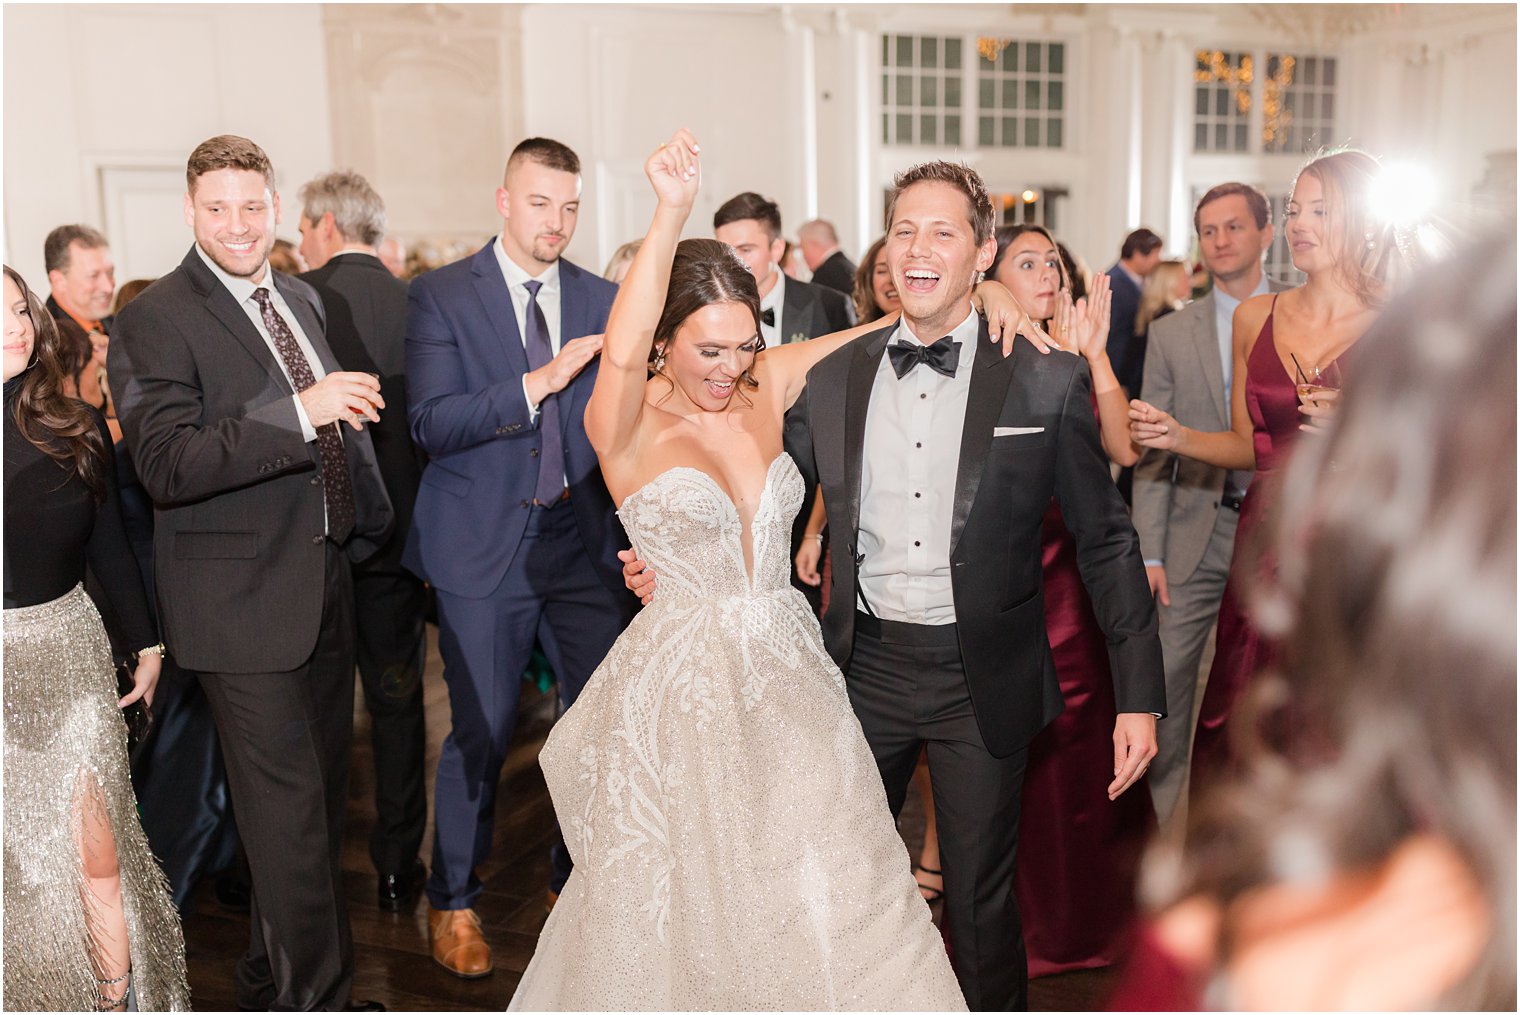 bride cheers during dancing at East Brunswick NJ wedding reception